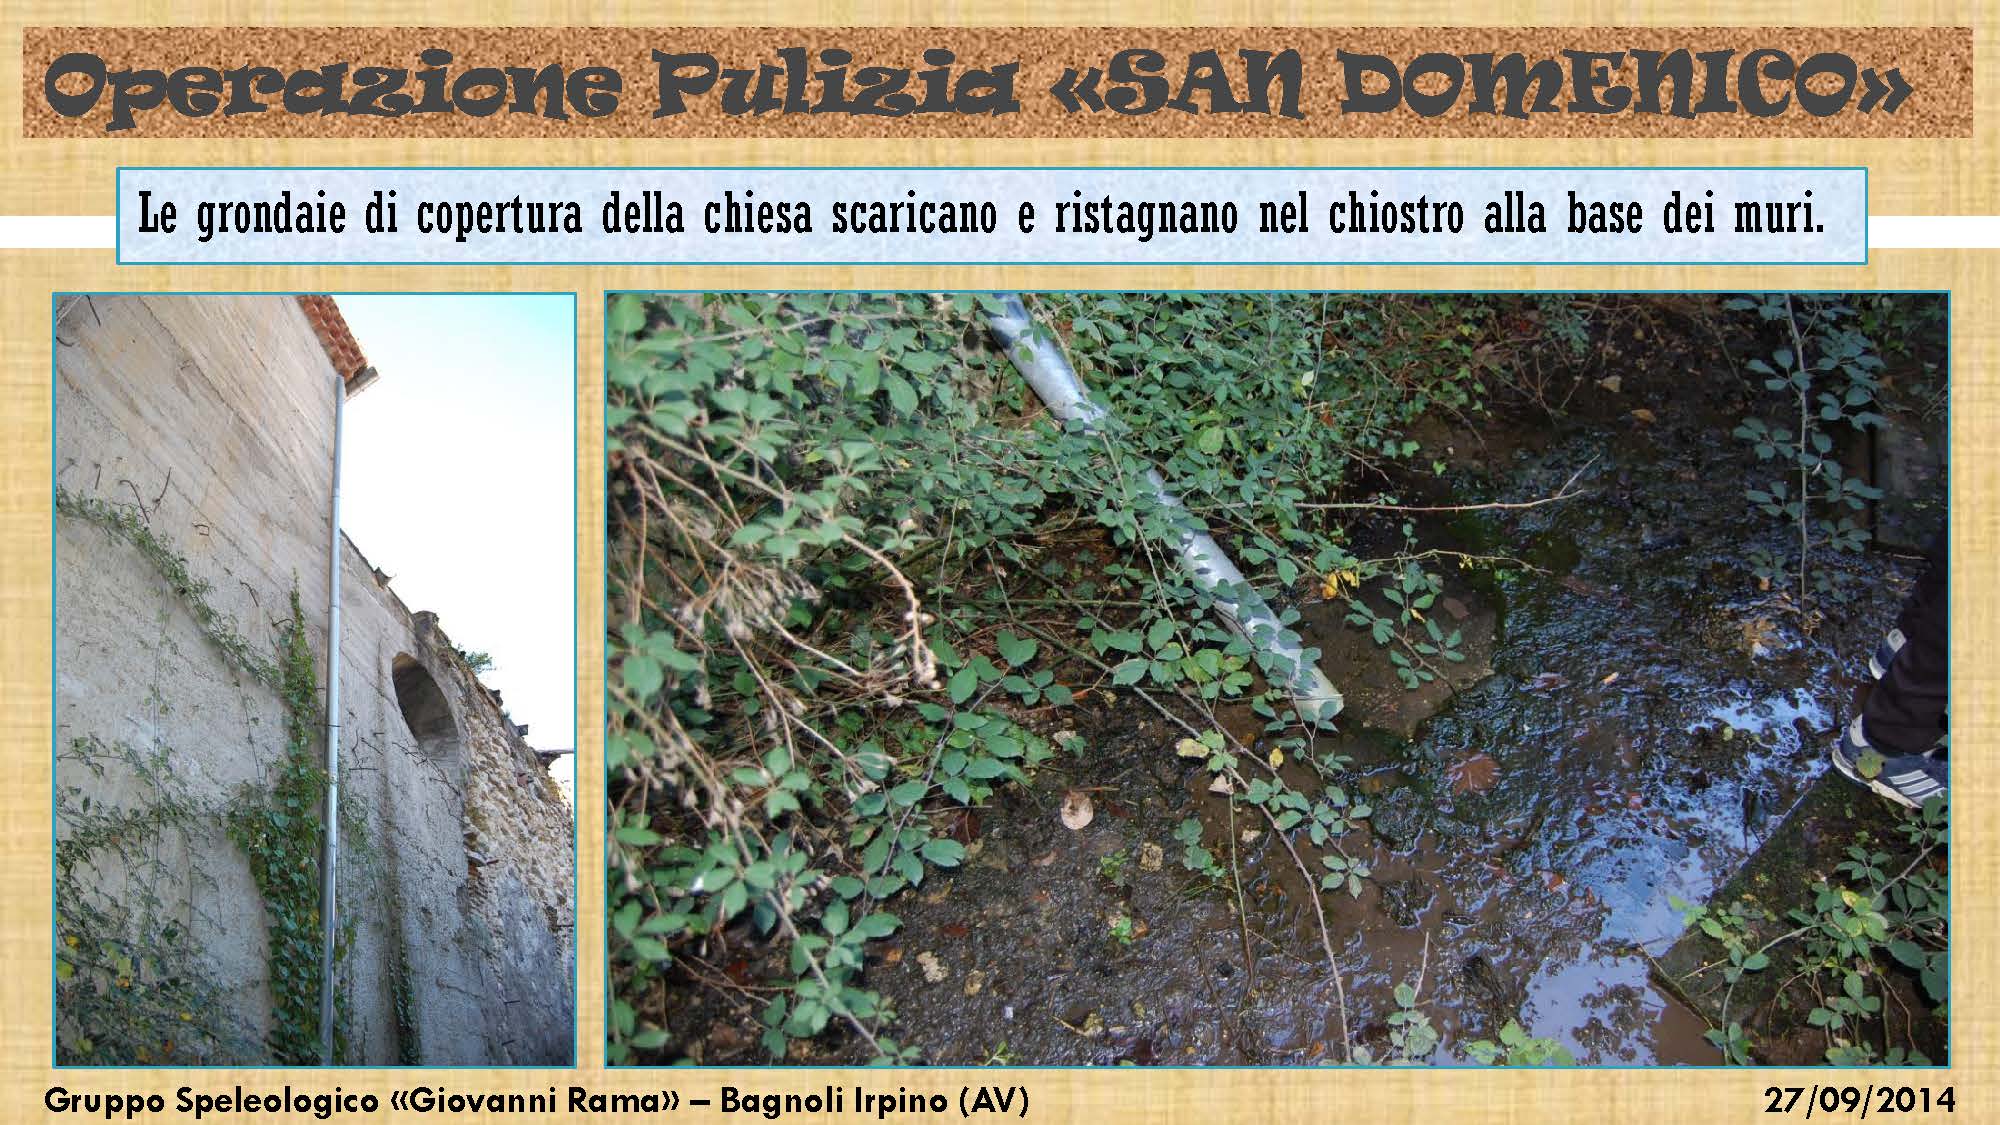 Bagnoli-Pulizia-San-Domenico-2014_Pagina_20